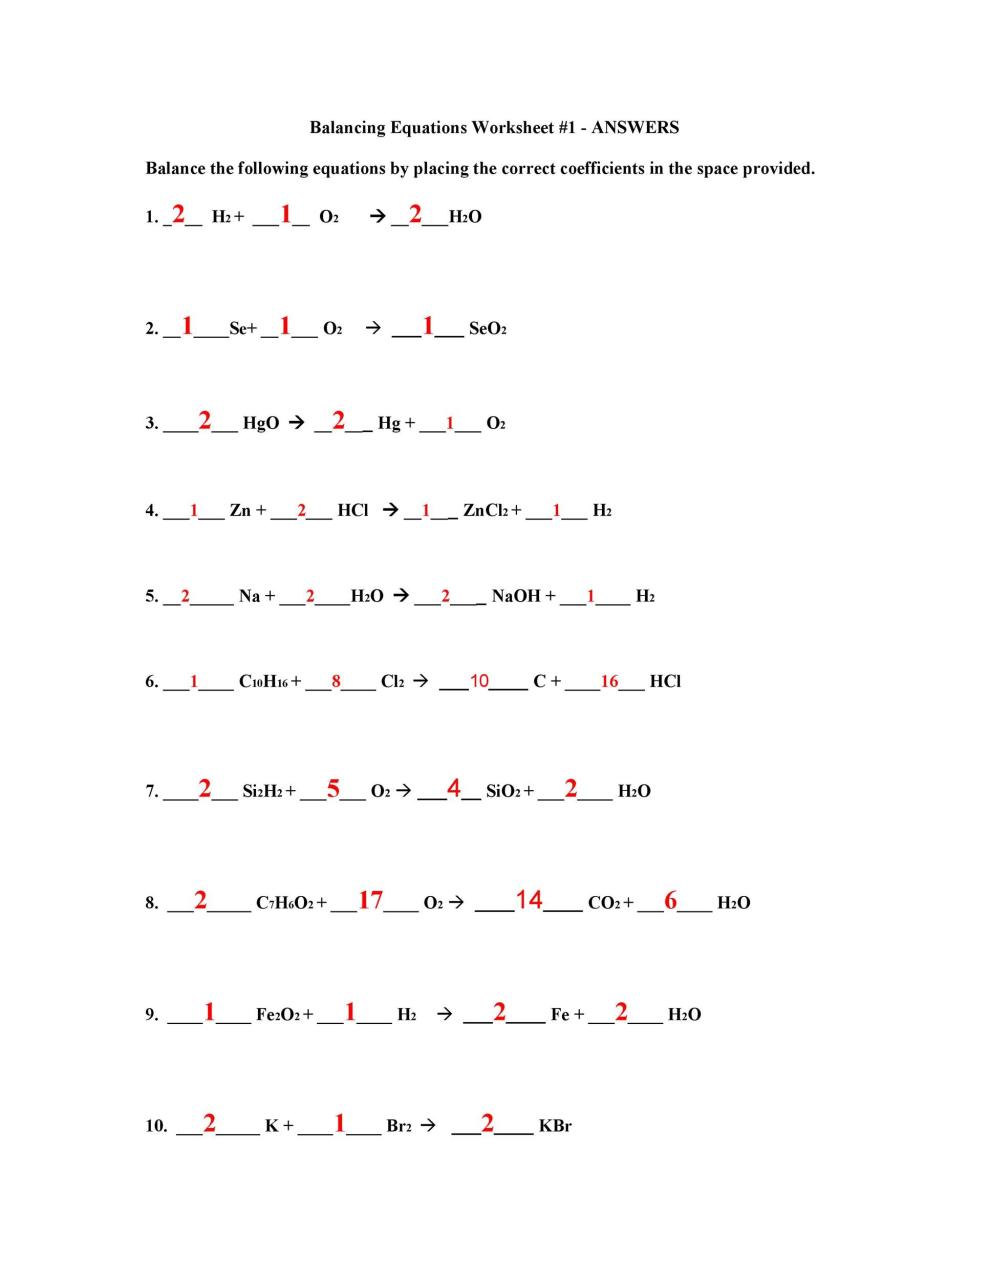 Writing and balancing chemical equations worksheet answers pdf